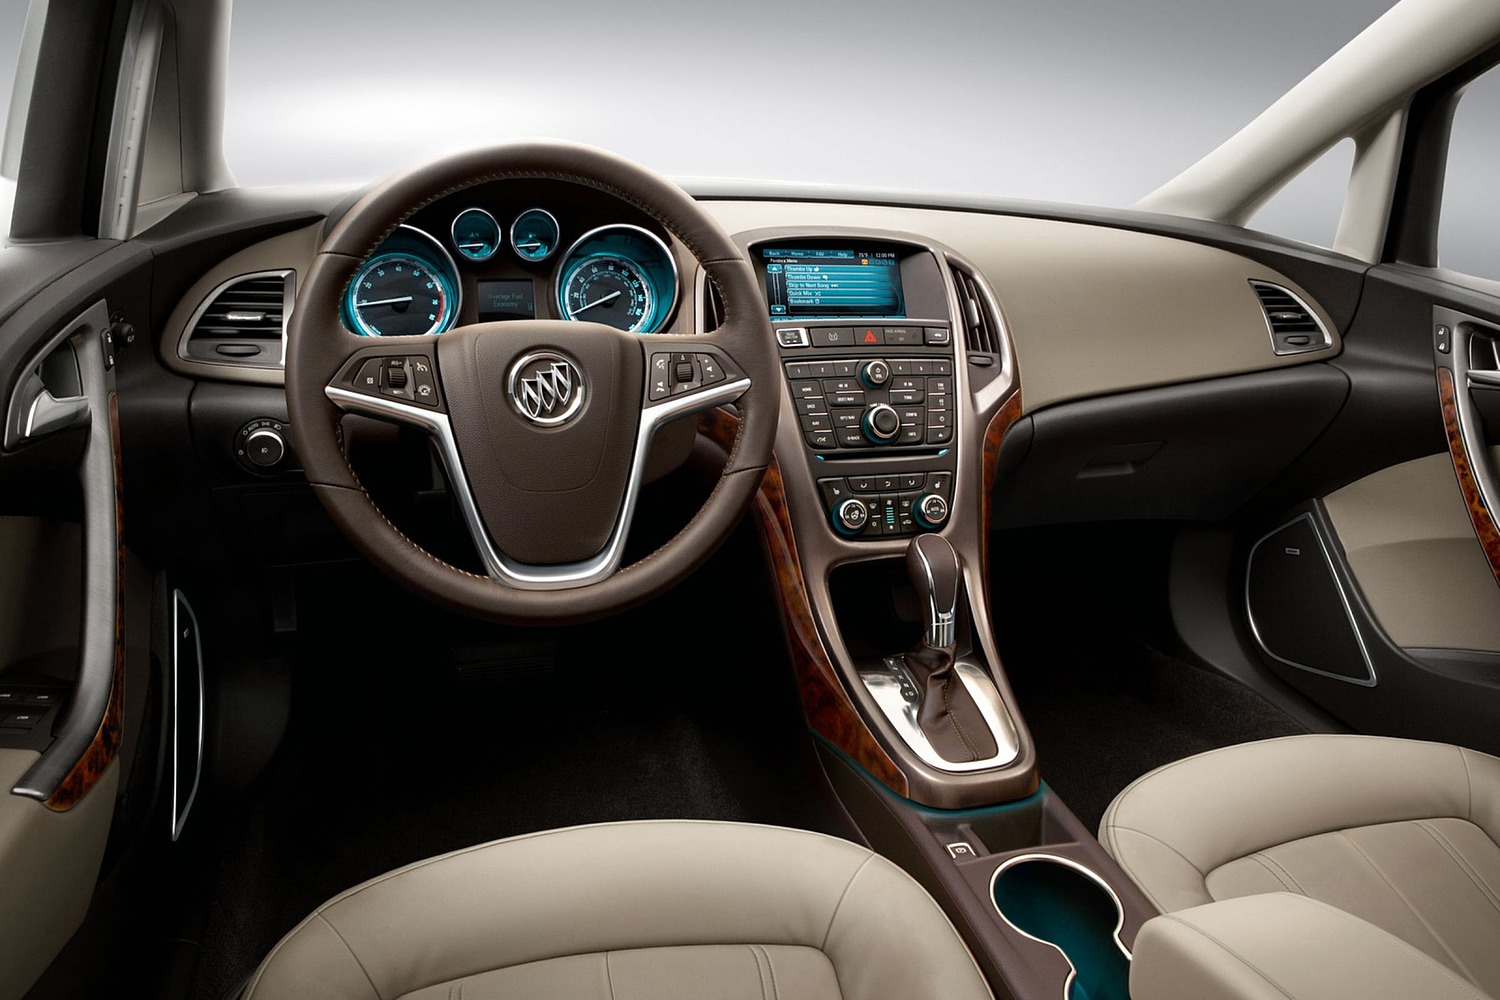 2015 Buick Verano Leather Group Sedan Dashboard Shown